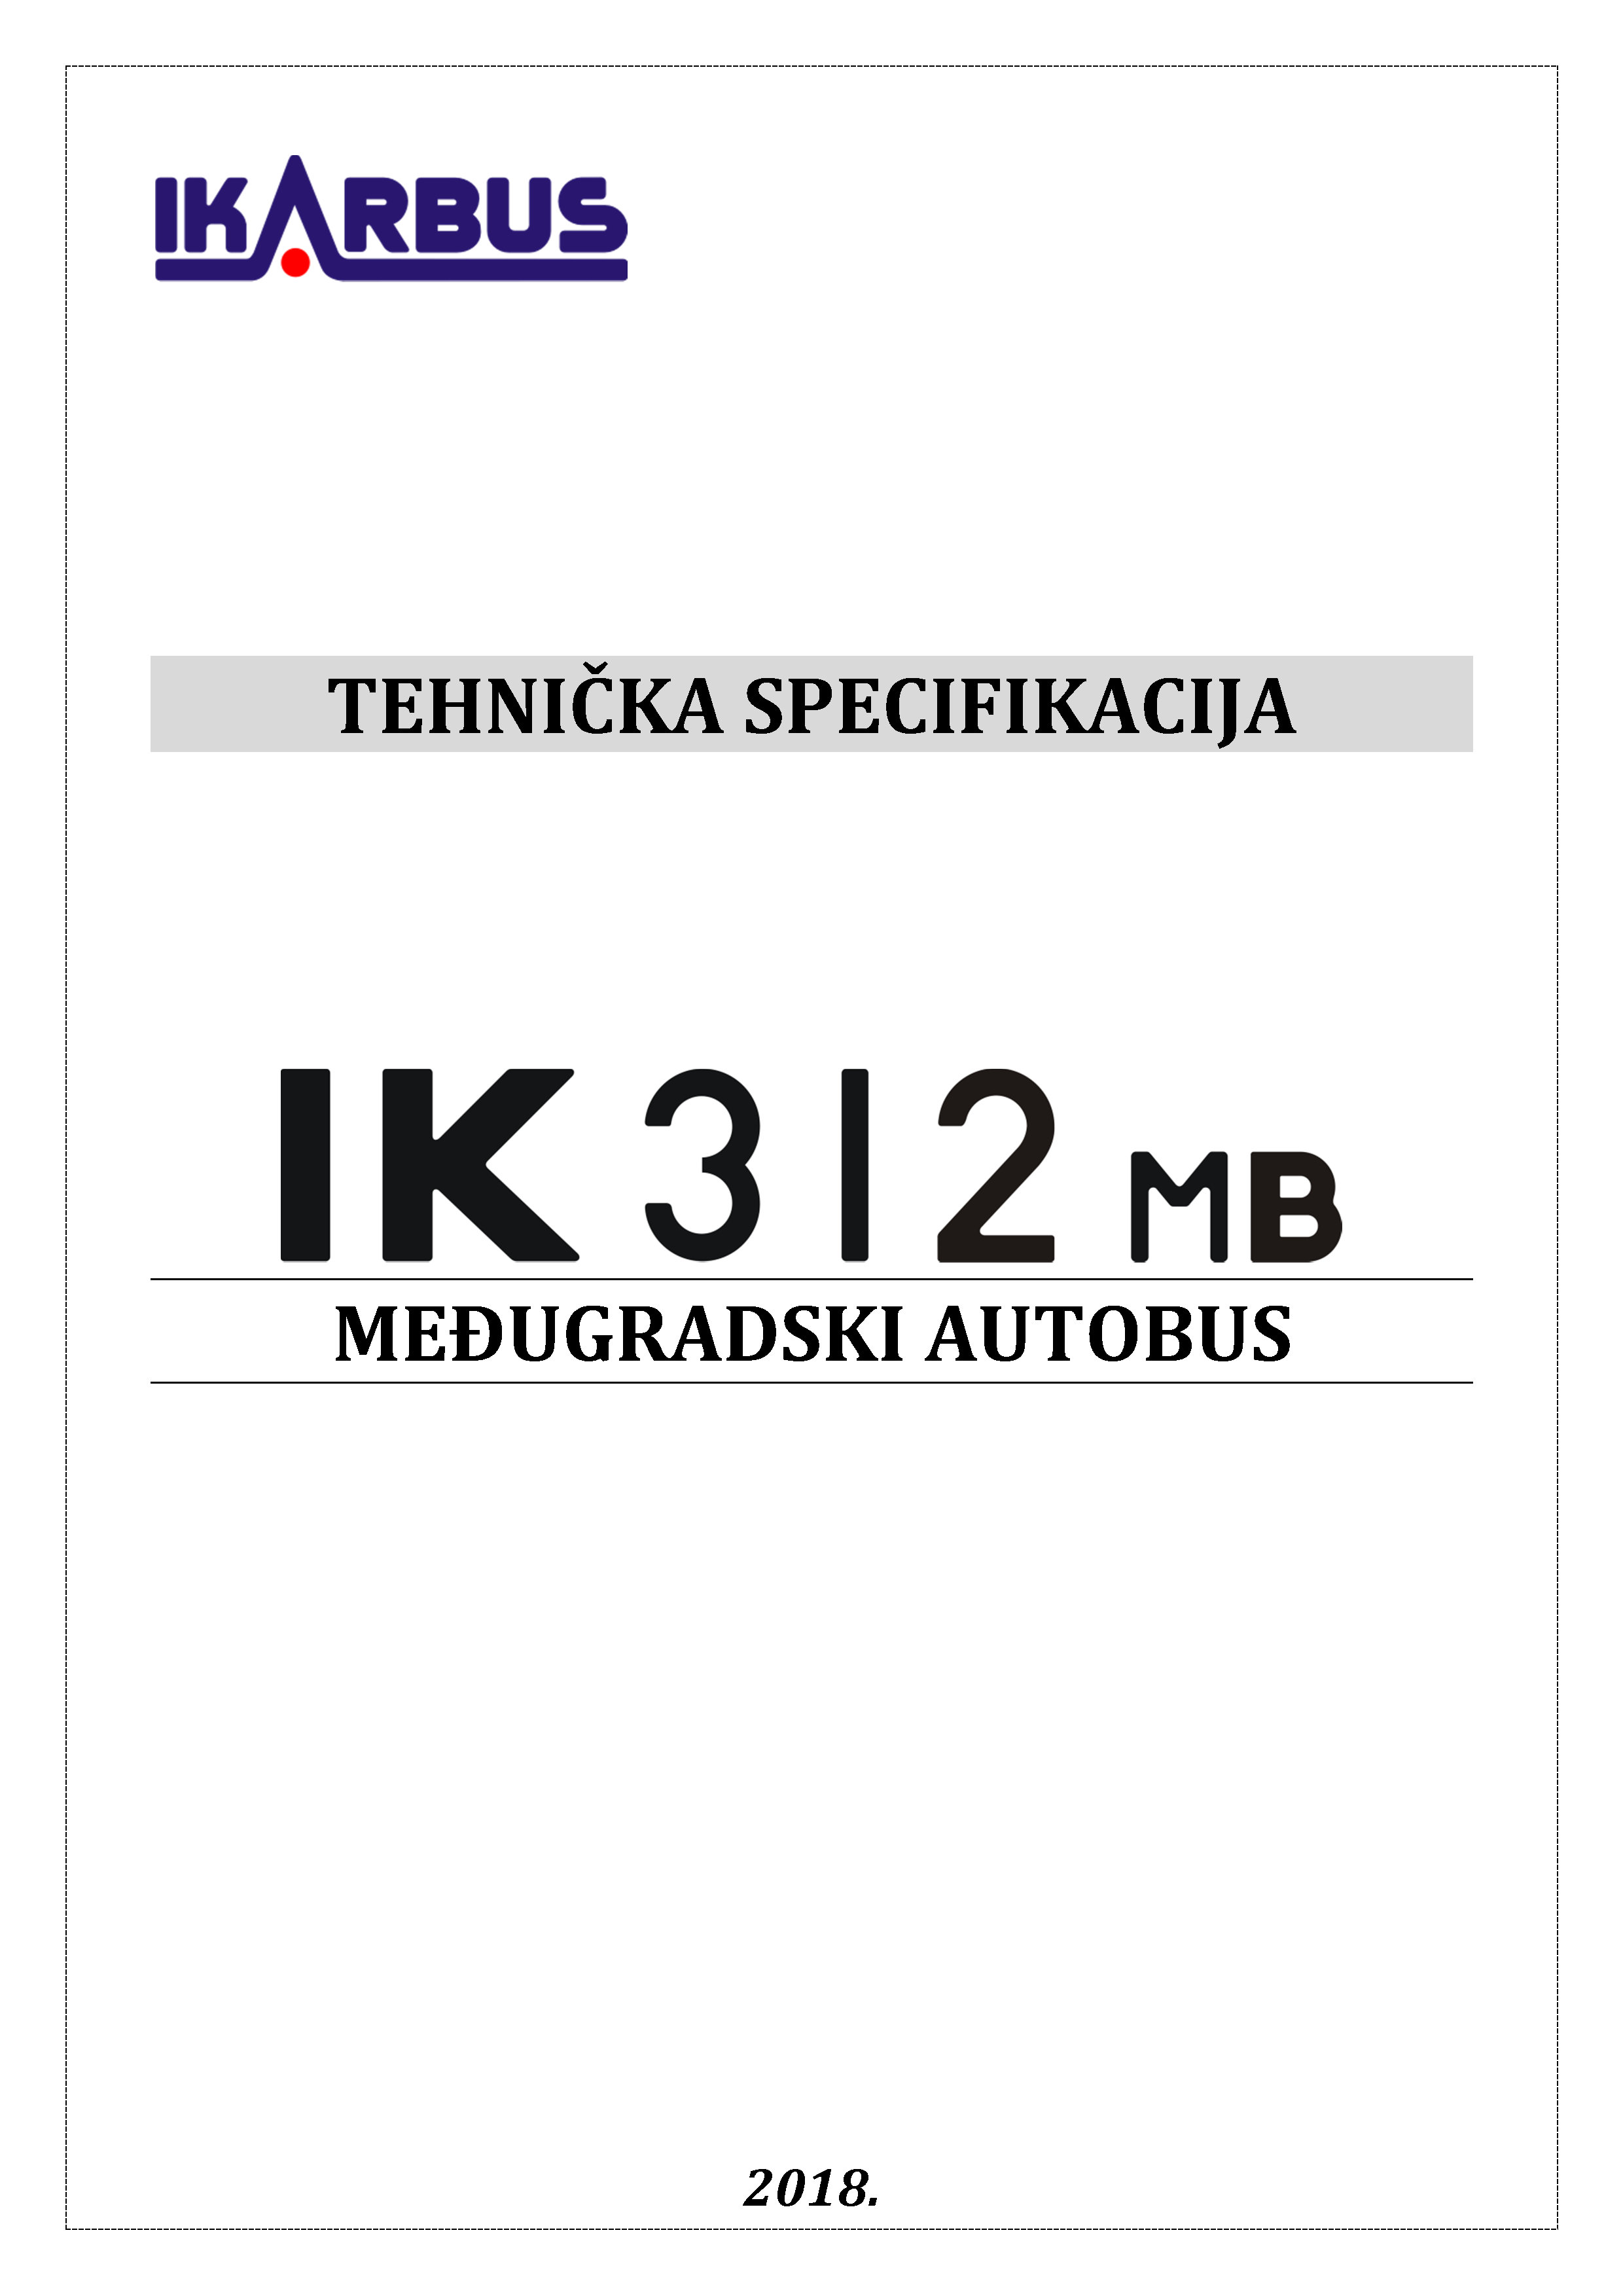 TS IK312MB sr